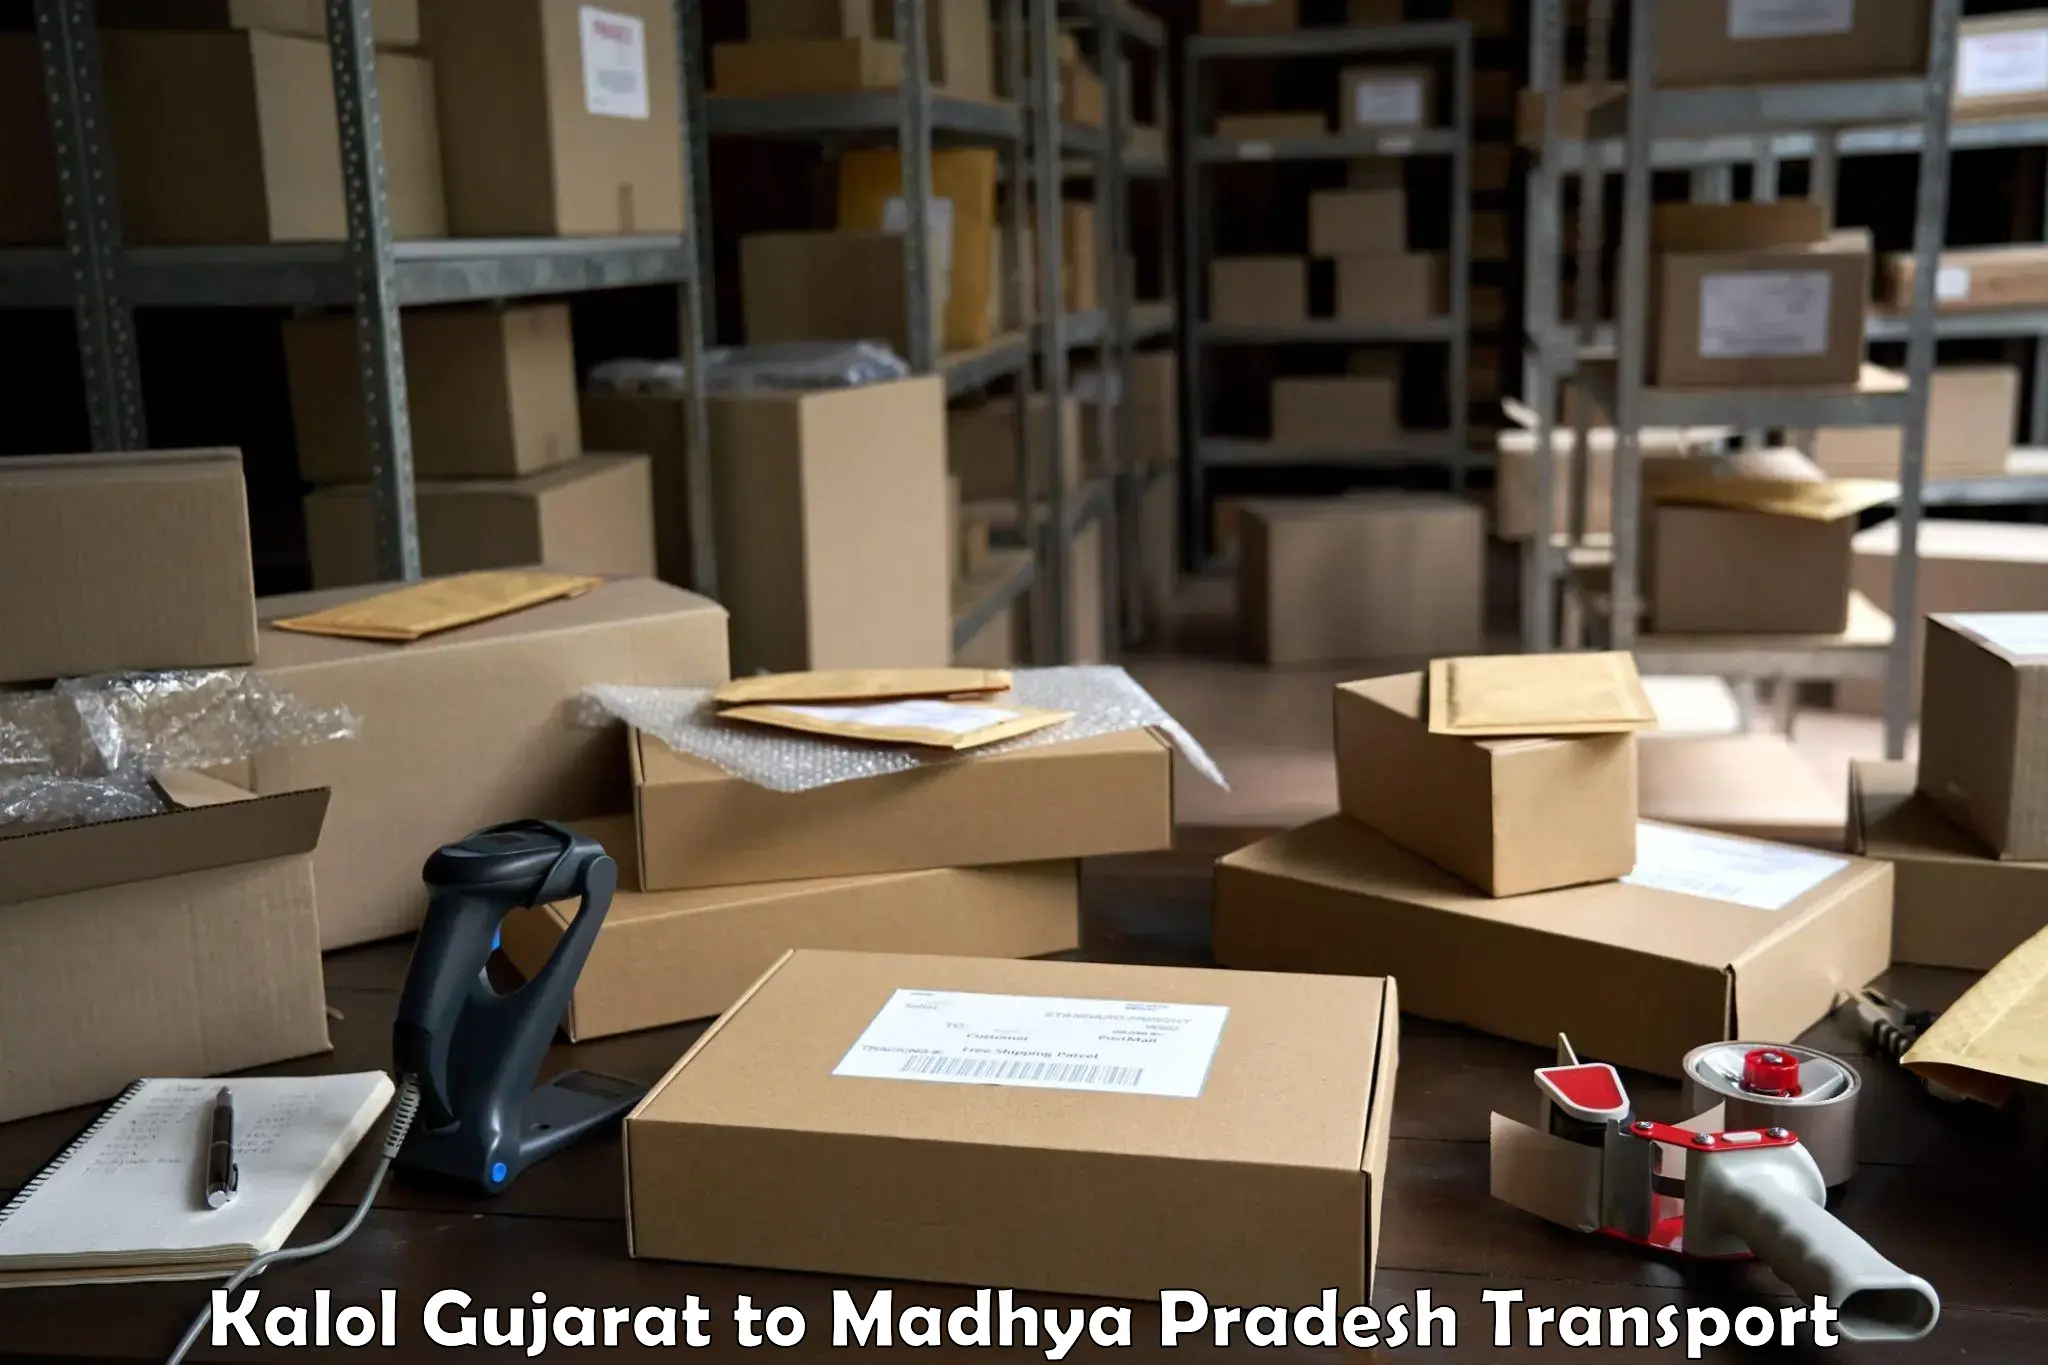 Container transport service Kalol Gujarat to Dindori